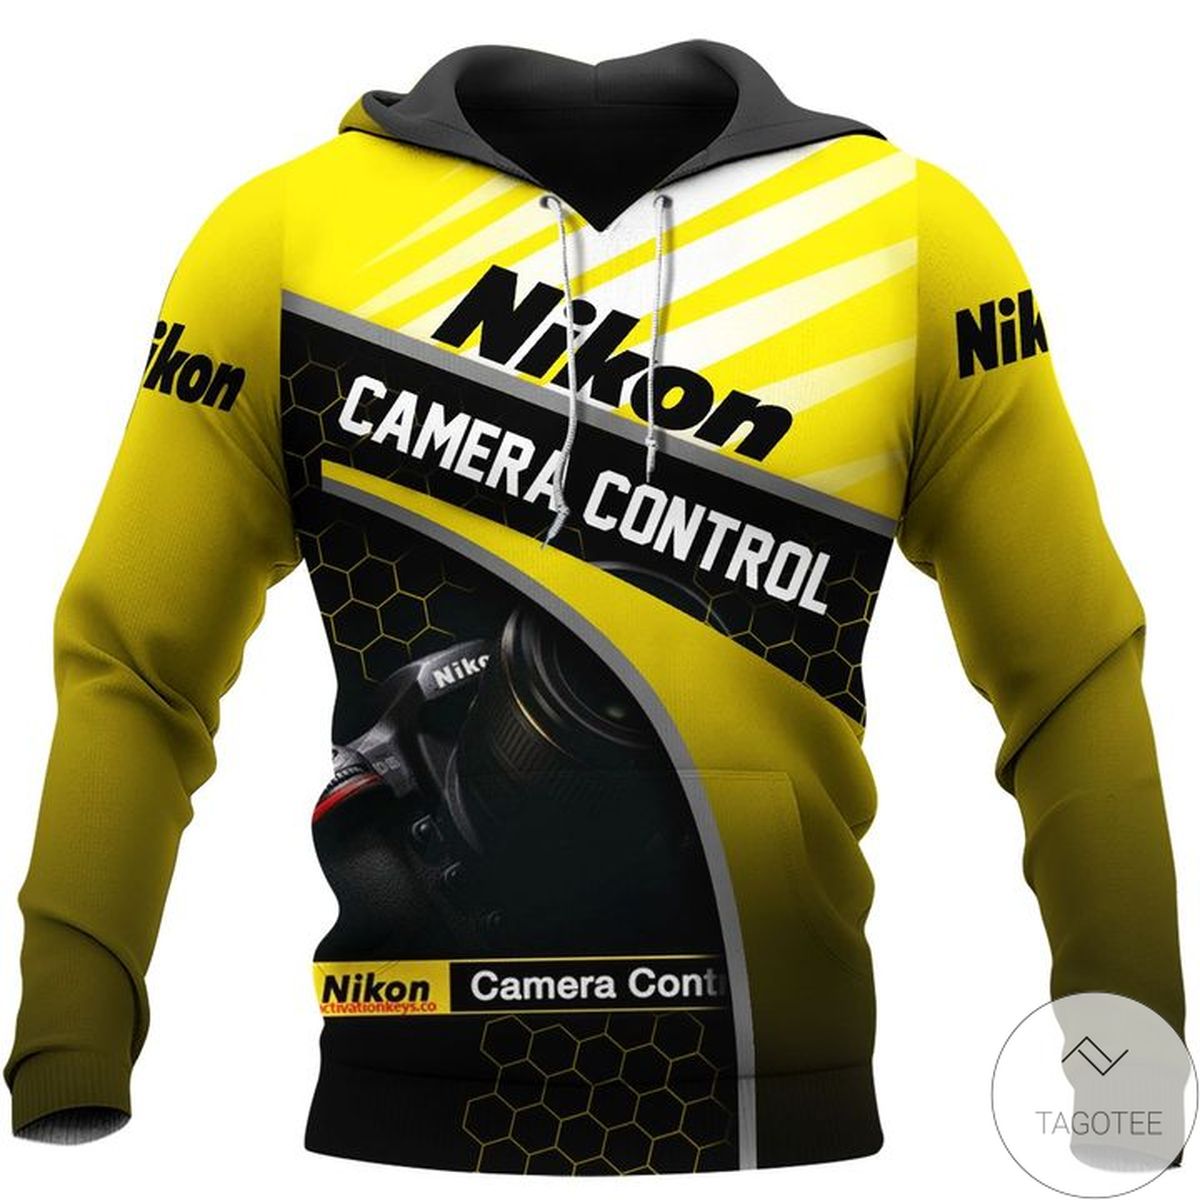 Nikon Camera Control All Over Print Hoodie